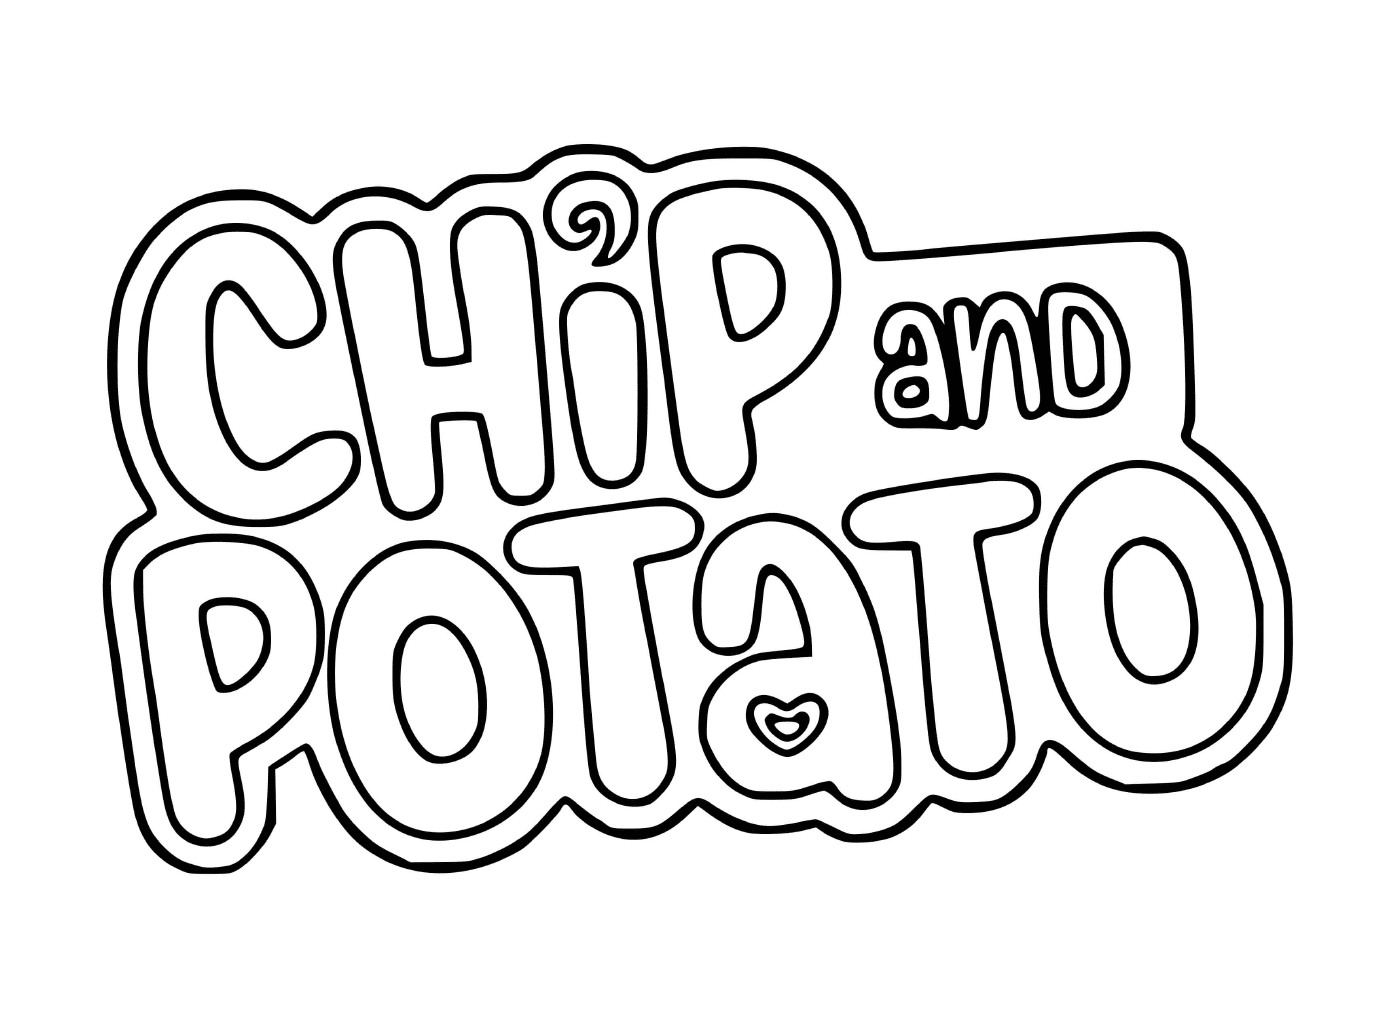  Chip and Potato Logo 